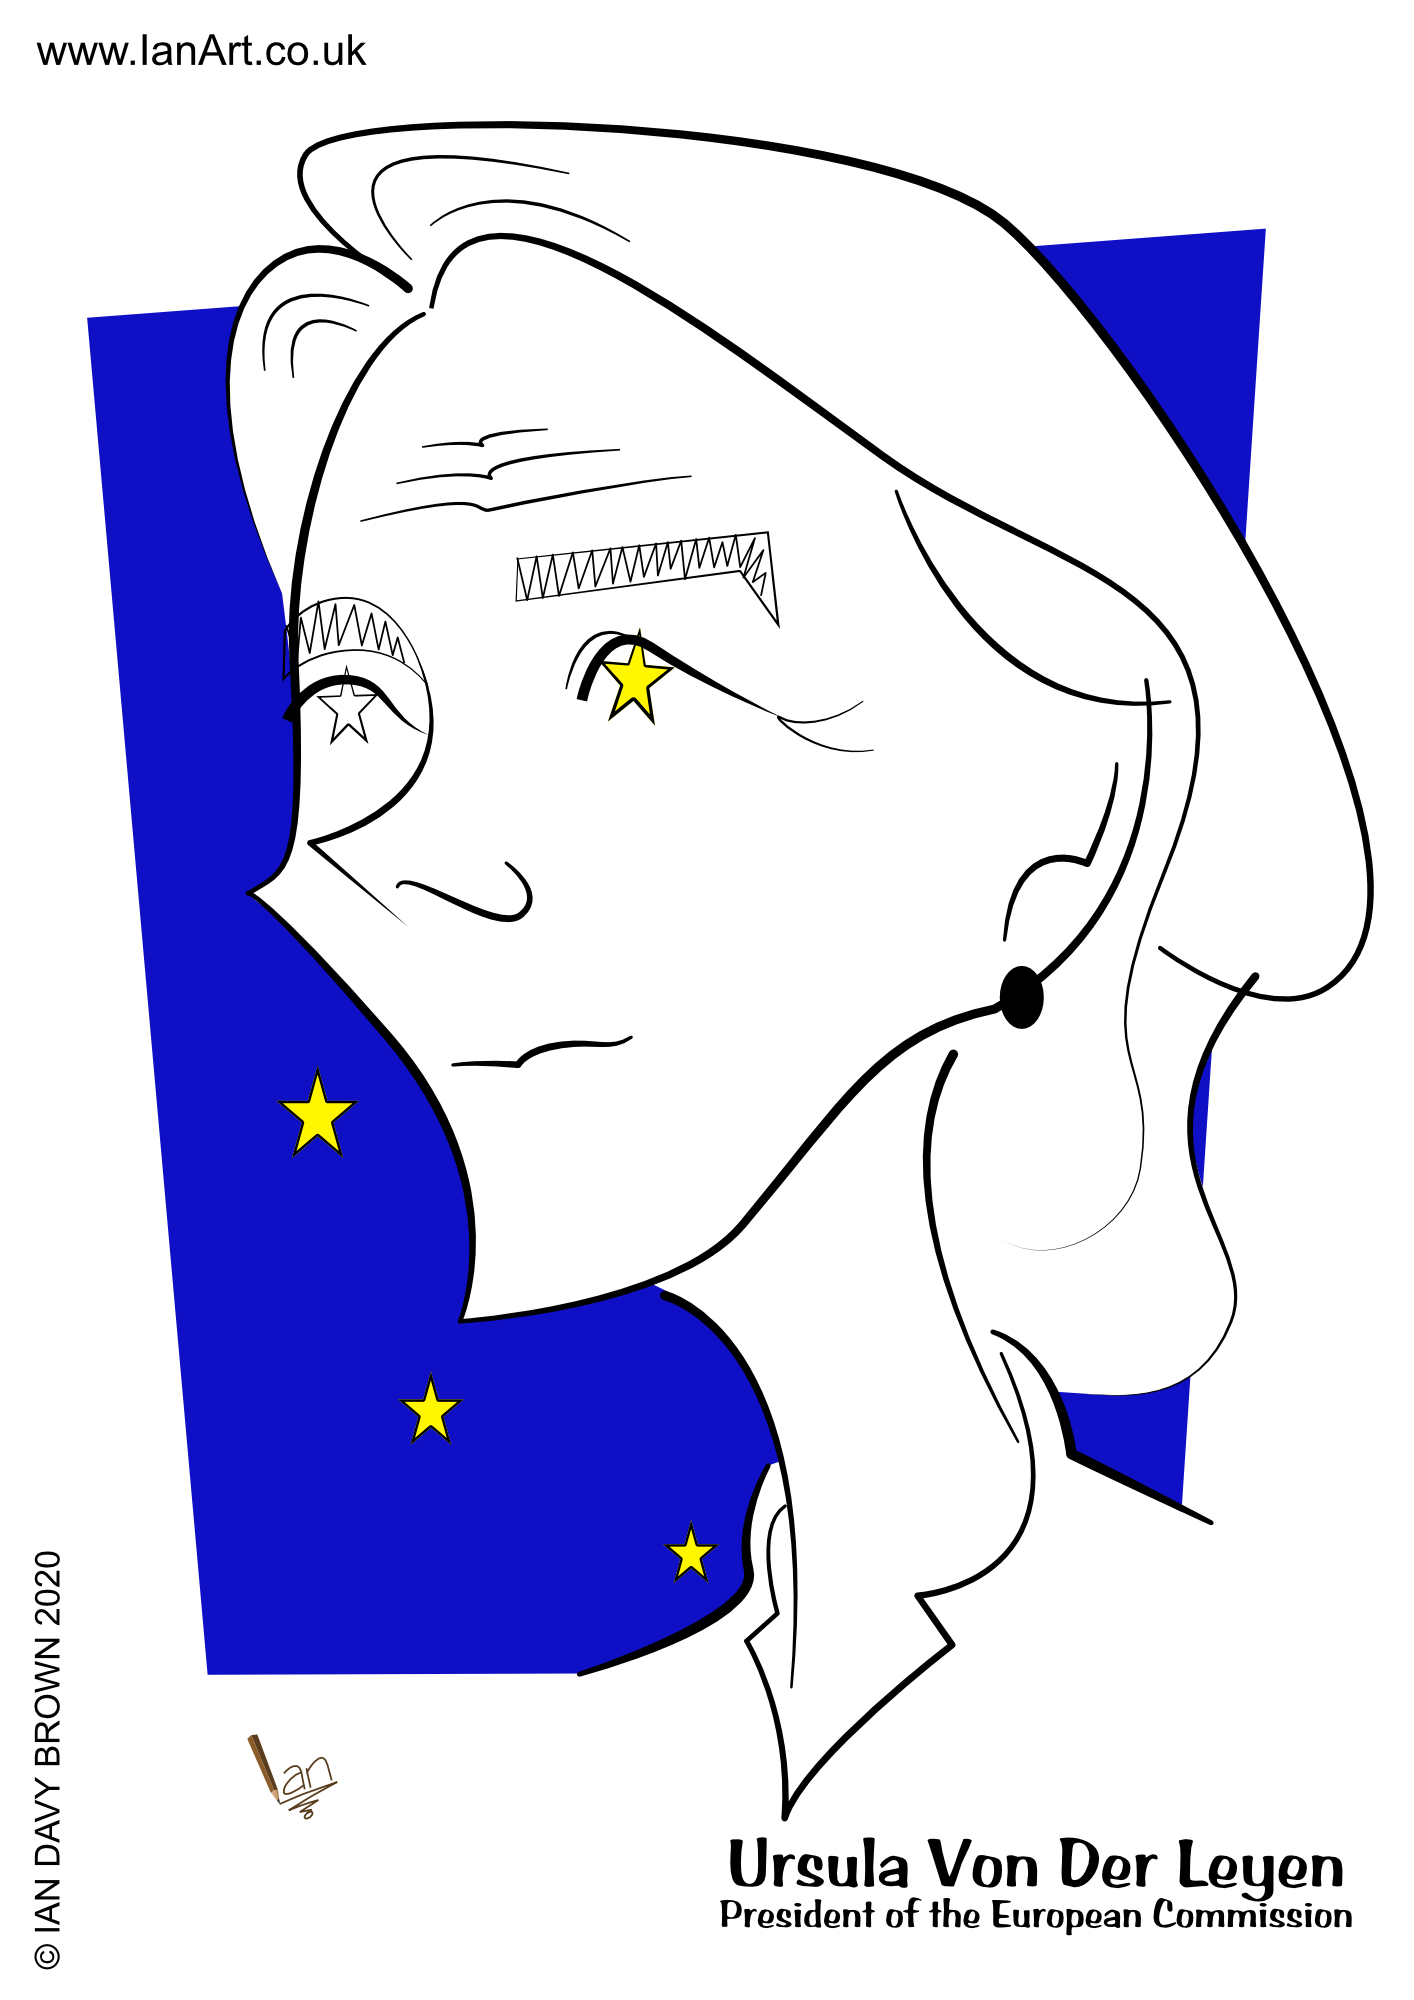 Ursula-Von-Der-Leyen-EU-President-caricature-symbolic-cartoon-by-IanArt-IDB